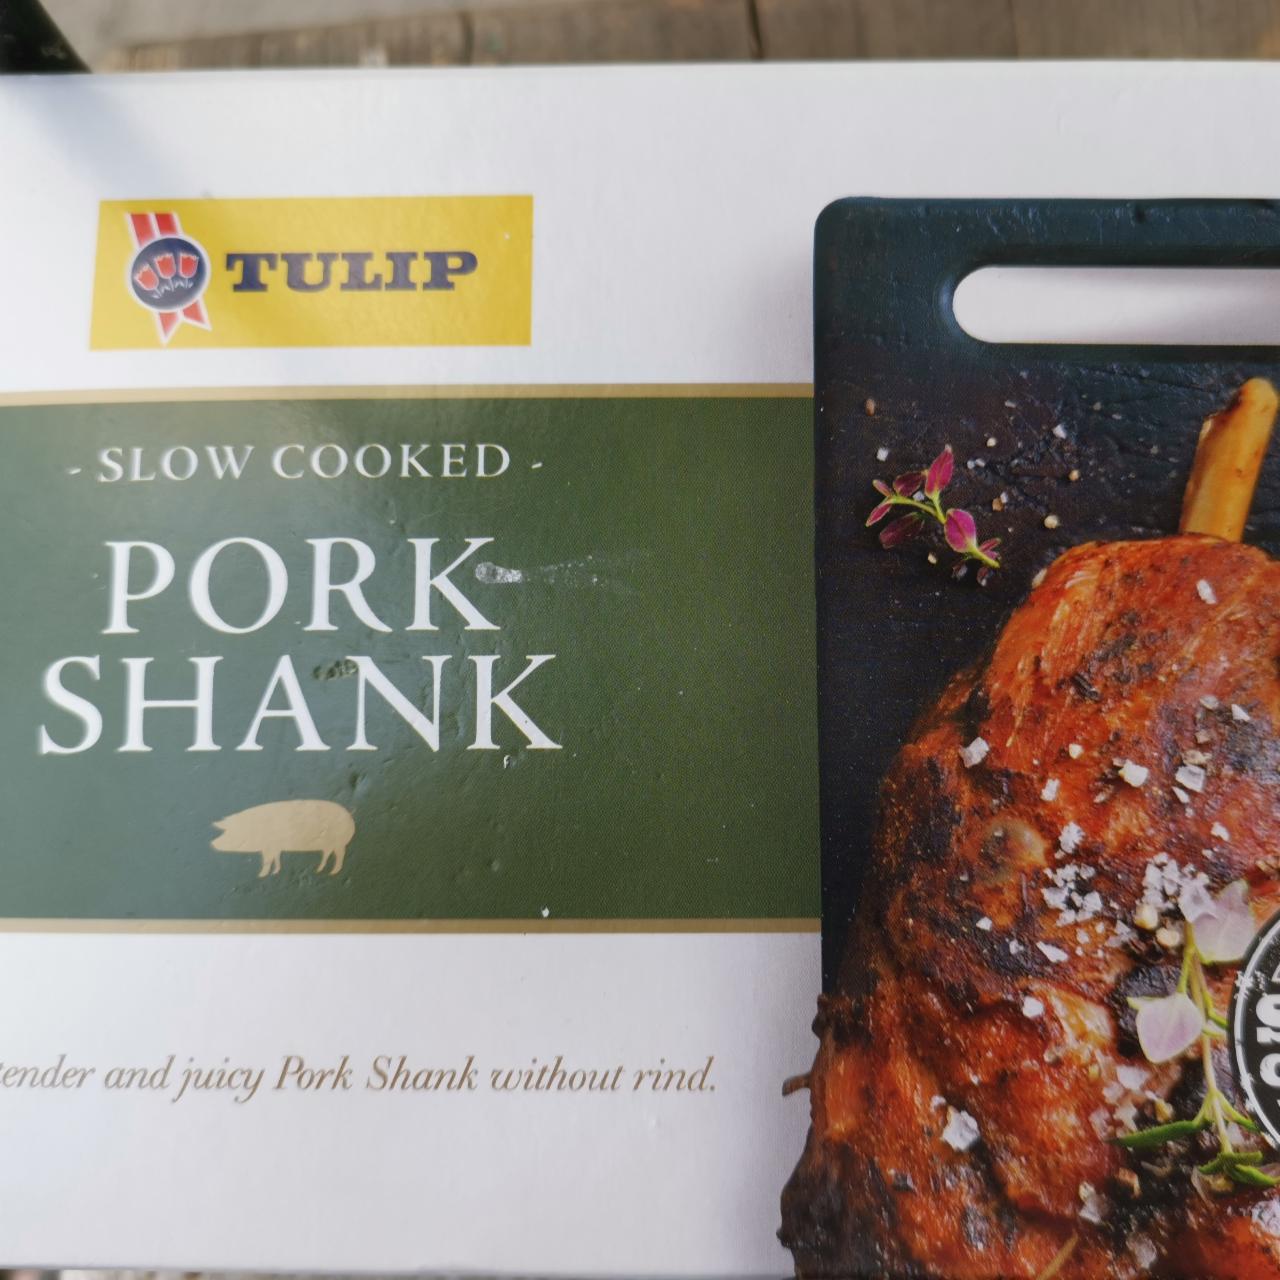 Fotografie - Slow Cooked Pork Shank Tulip